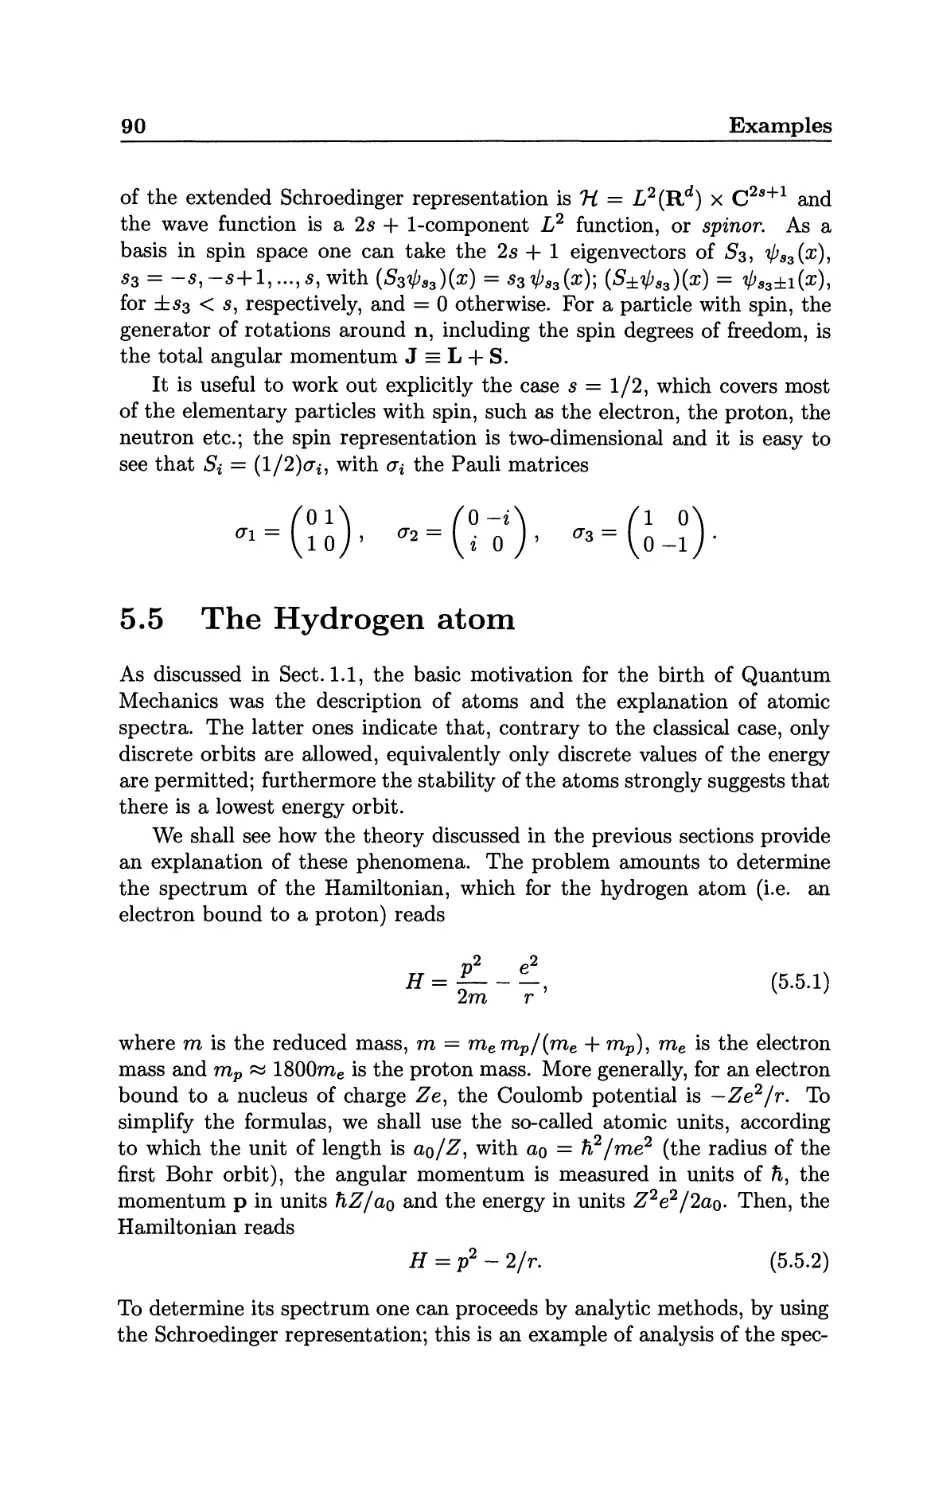 5.5 The Hydrogen atom